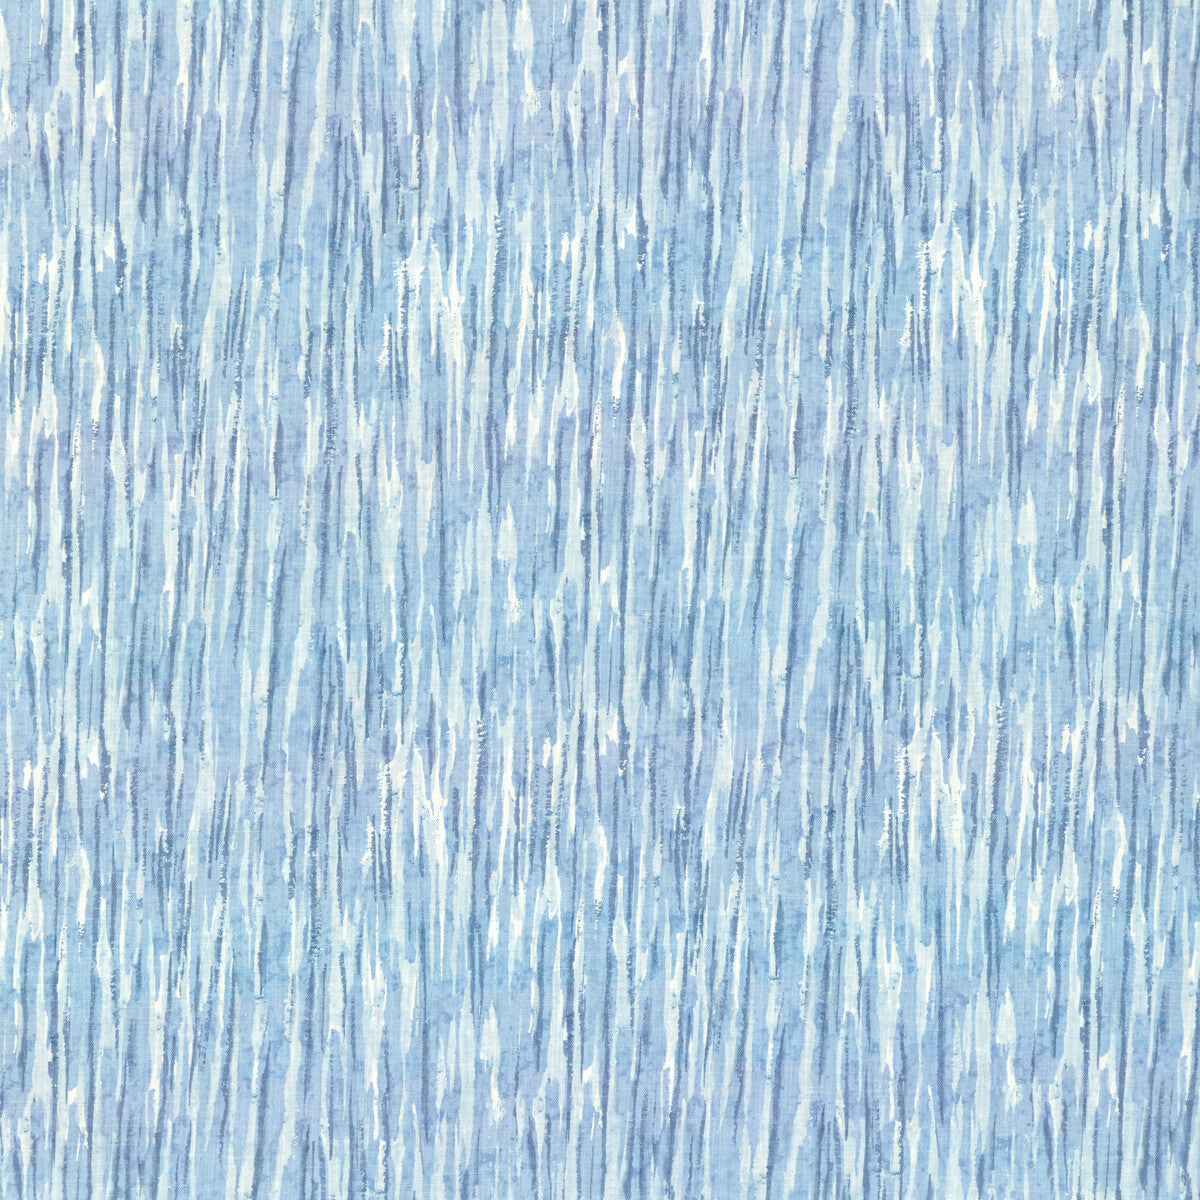 Senko fabric in sky color - pattern SENKO.15.0 - by Kravet Basics in the Monterey collection